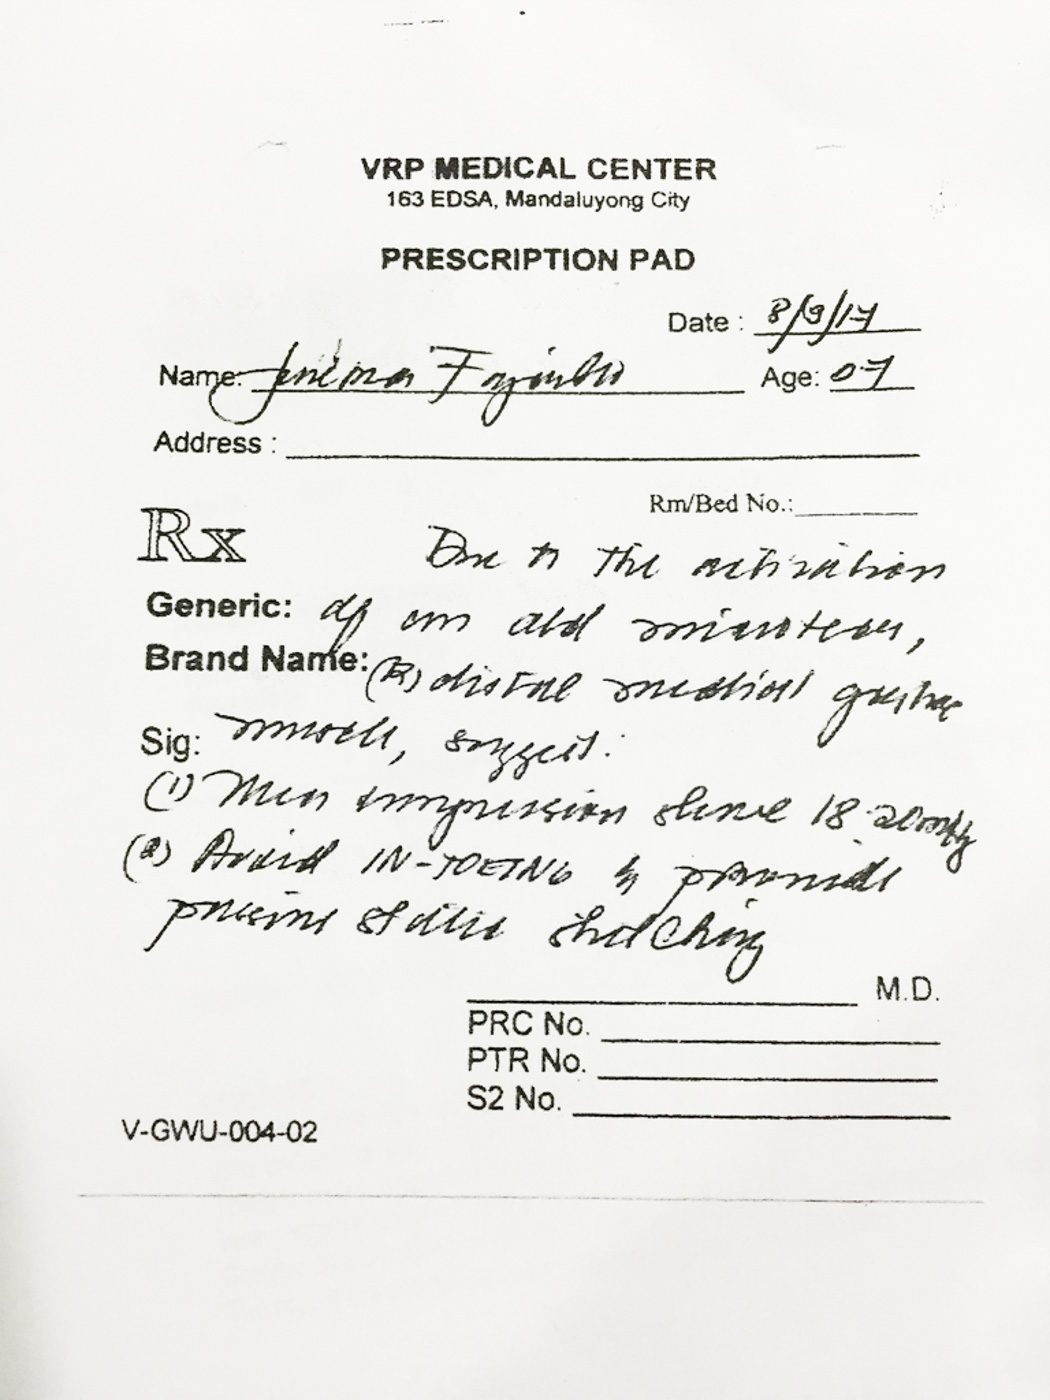 PRESCRIPTION PAD. June Mar Fajardo's prescription pad. Photo by Jane Bracher/Rappler 